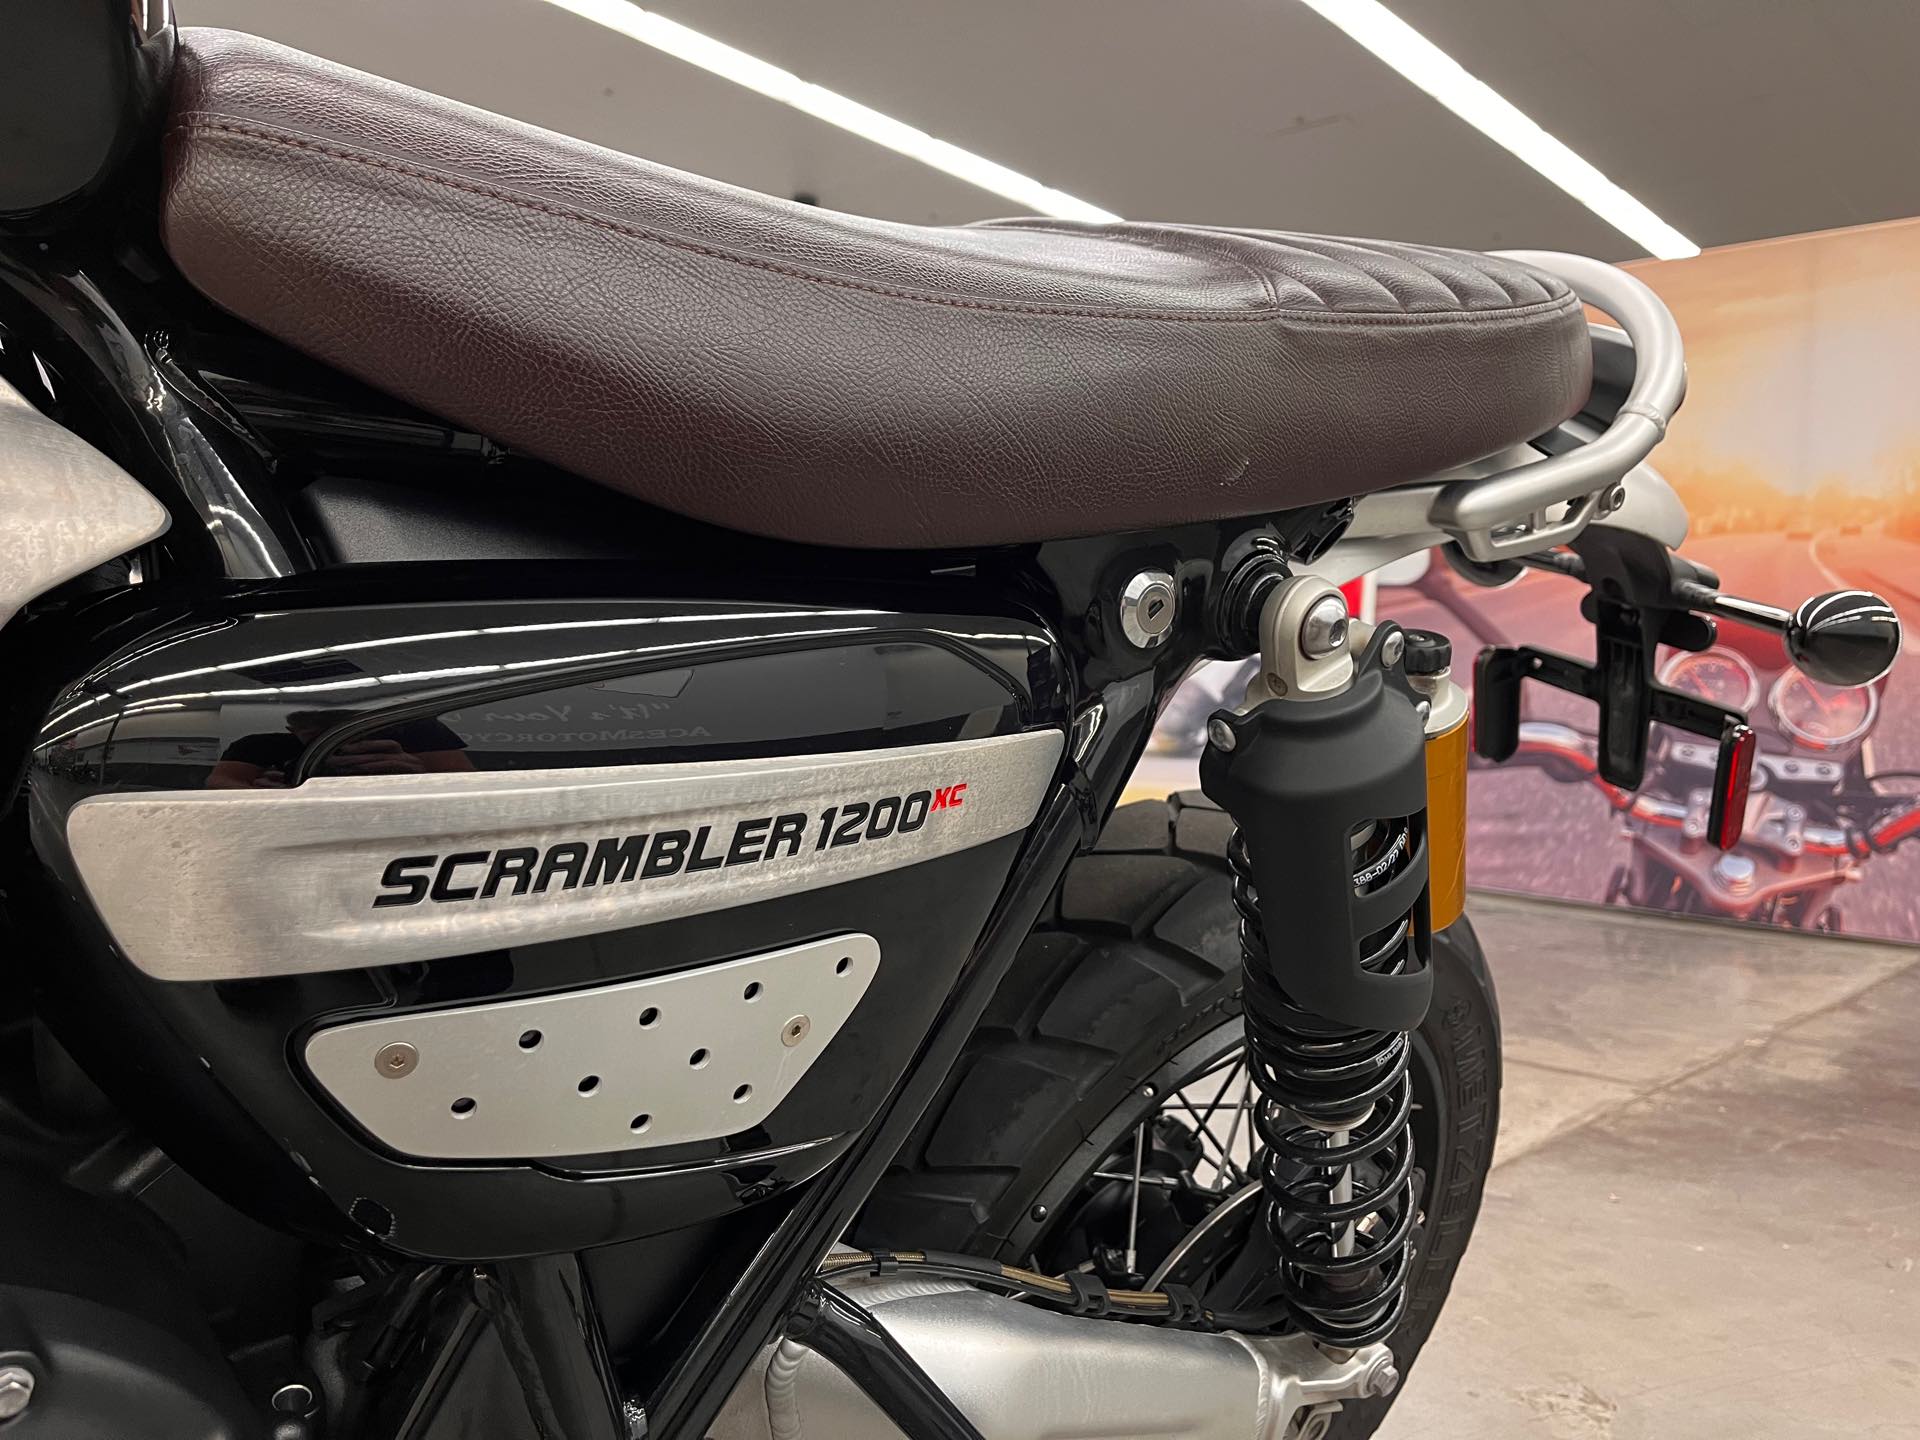 2020 Triumph Scrambler 1200 XC at Aces Motorcycles - Denver